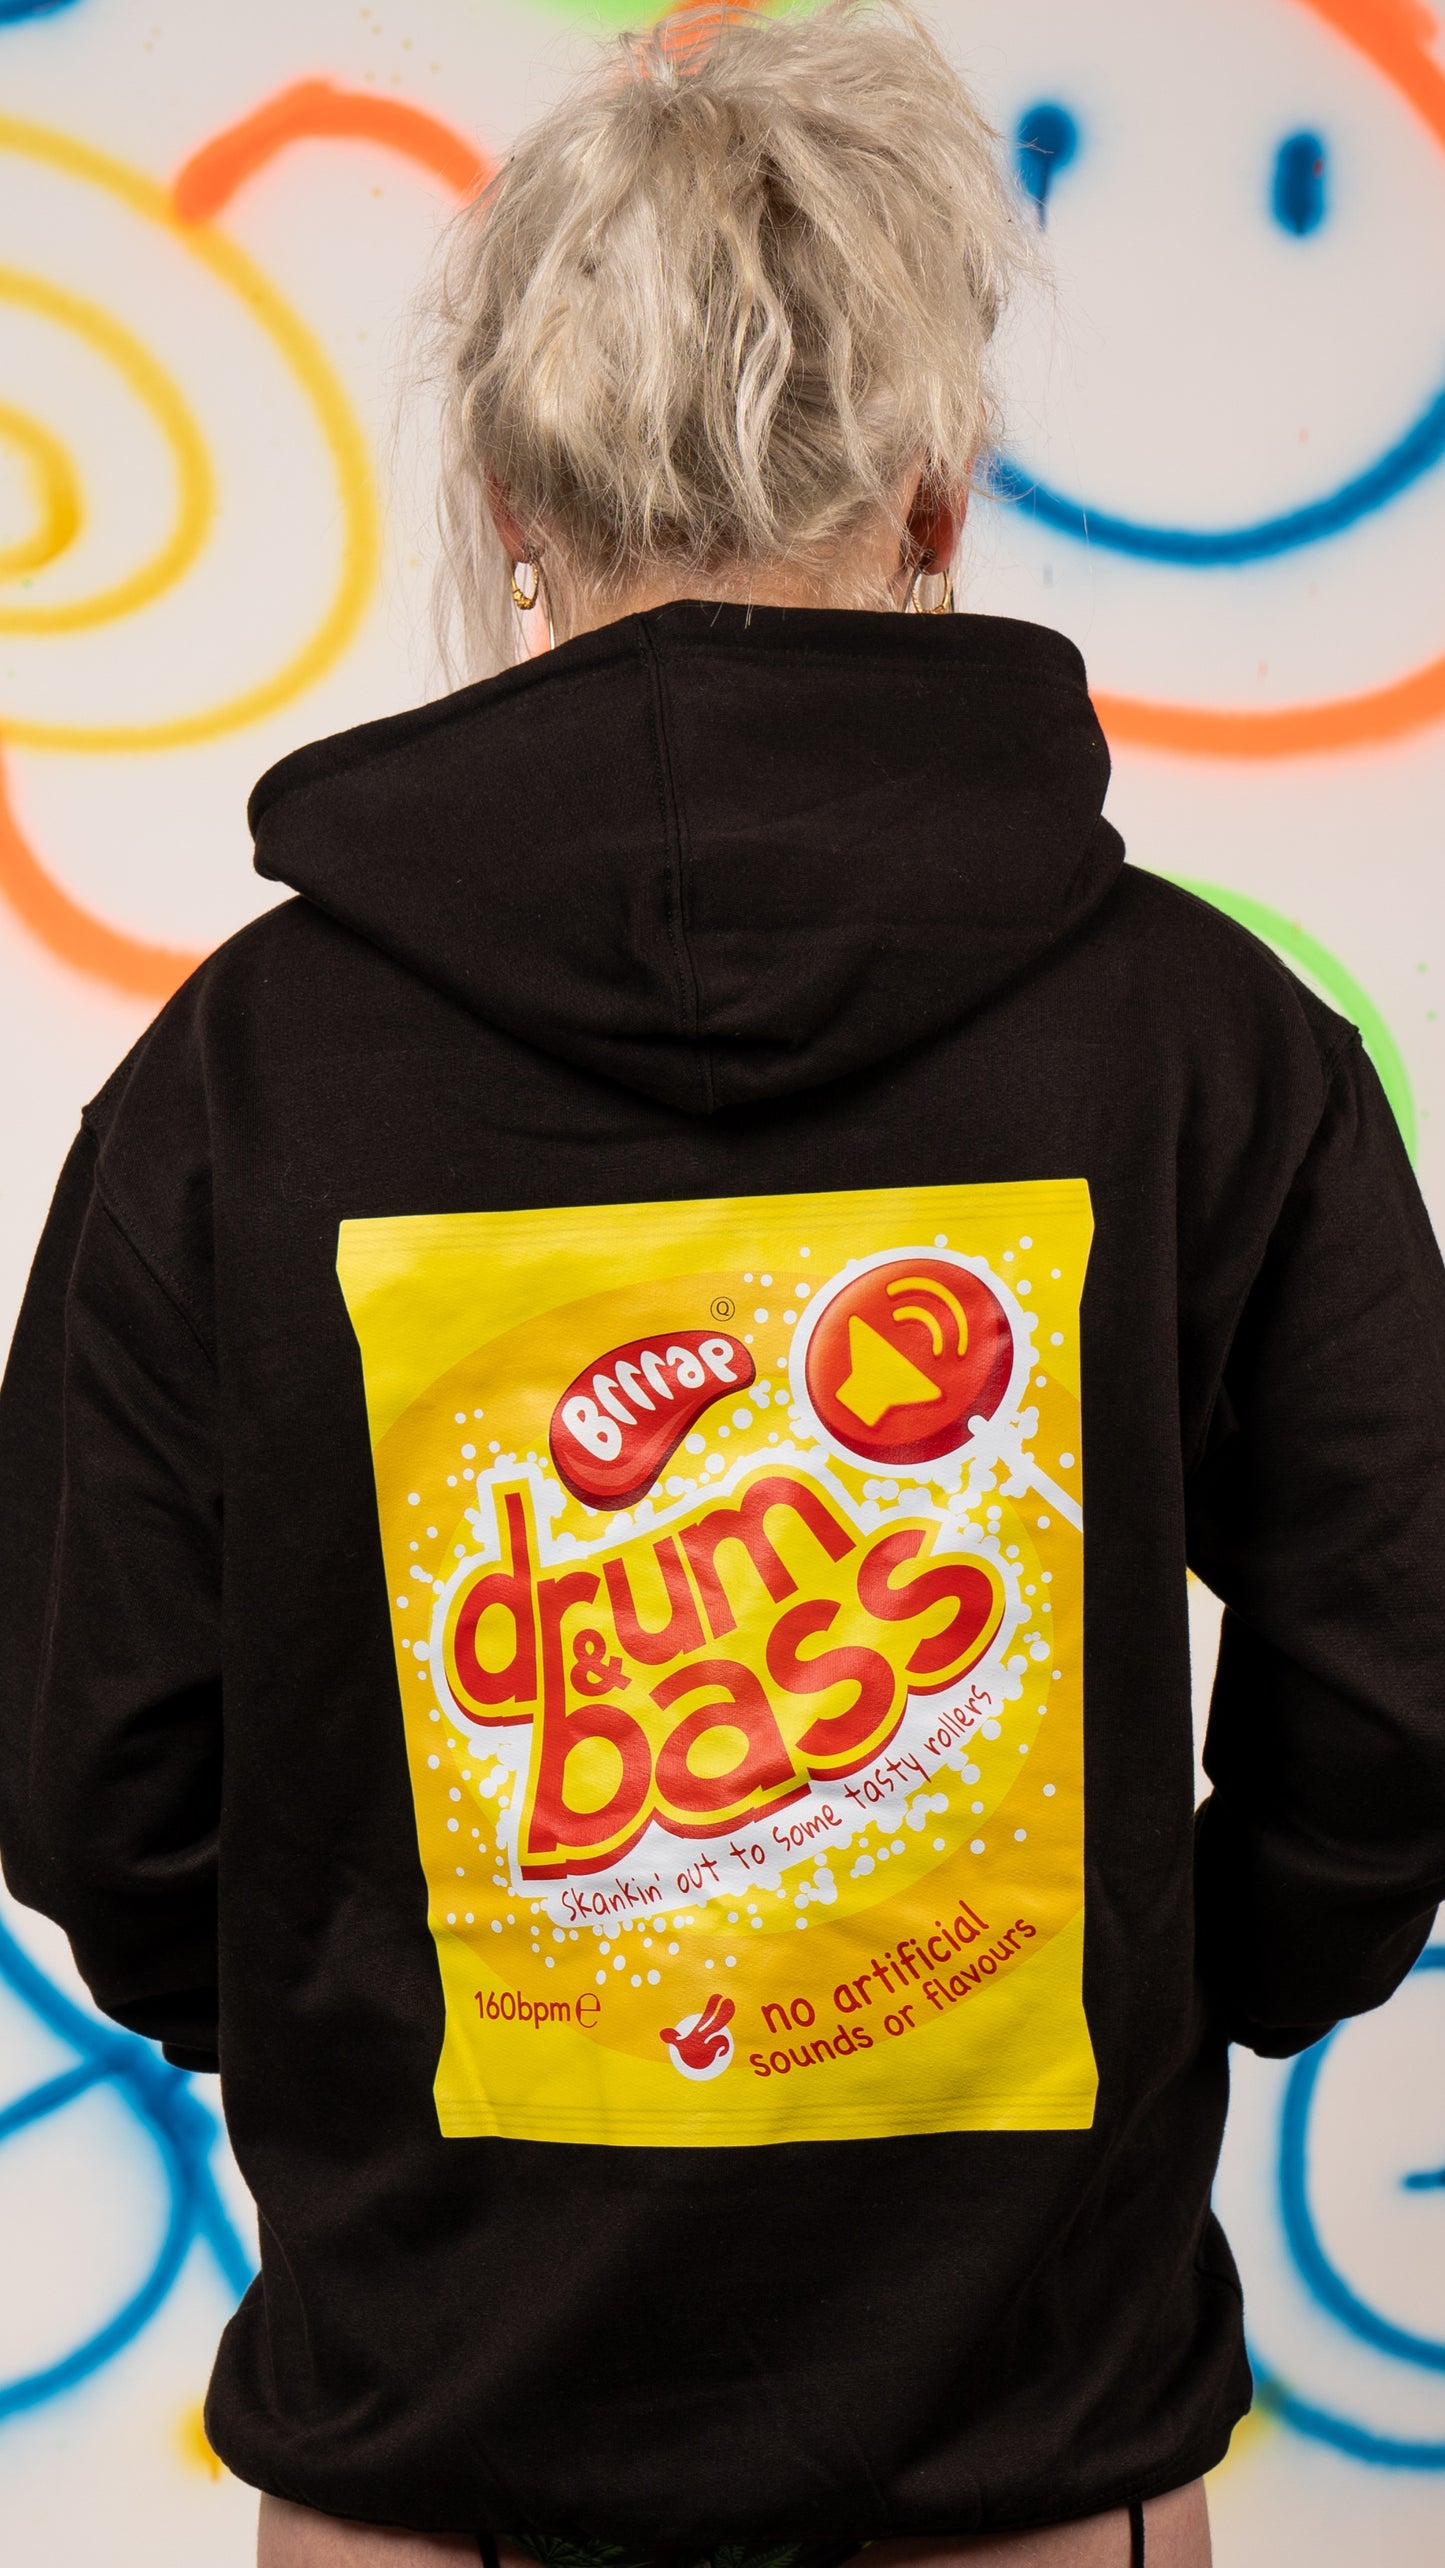 Dip Dab Drum & Bass, Front & Back Print Hoody Black